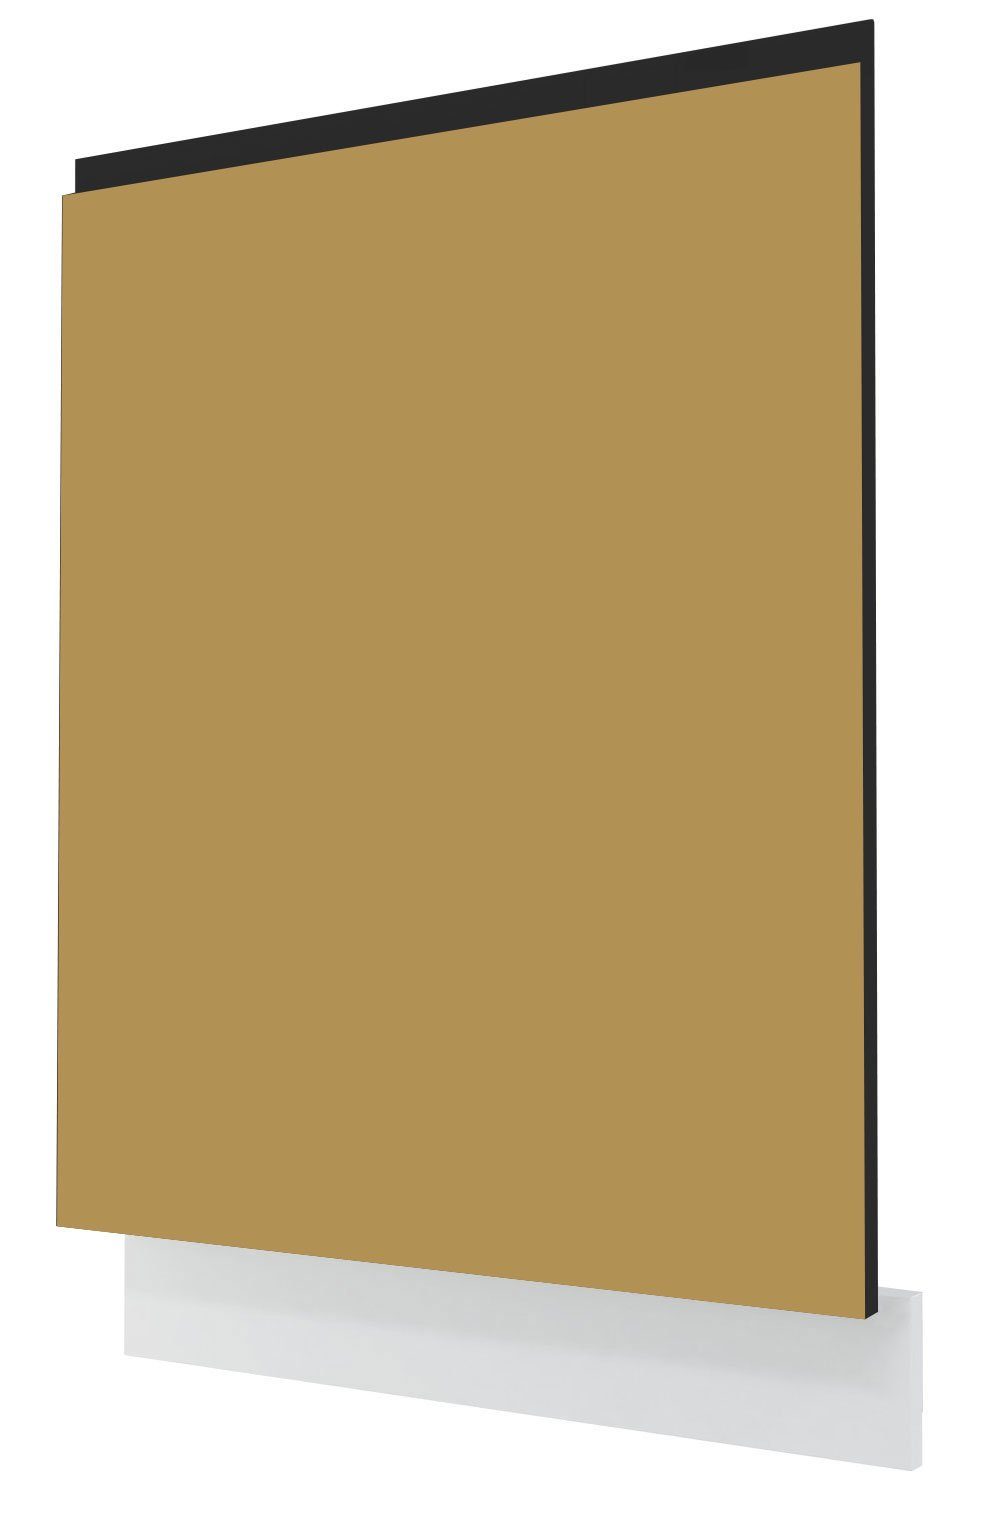 [Super günstiger Sonderpreis! ] Feldmann-Wohnen Sockelblende Velden, 60cm Front- super wählbar matt grifflos gold Sockelfarbe und vollintegriert